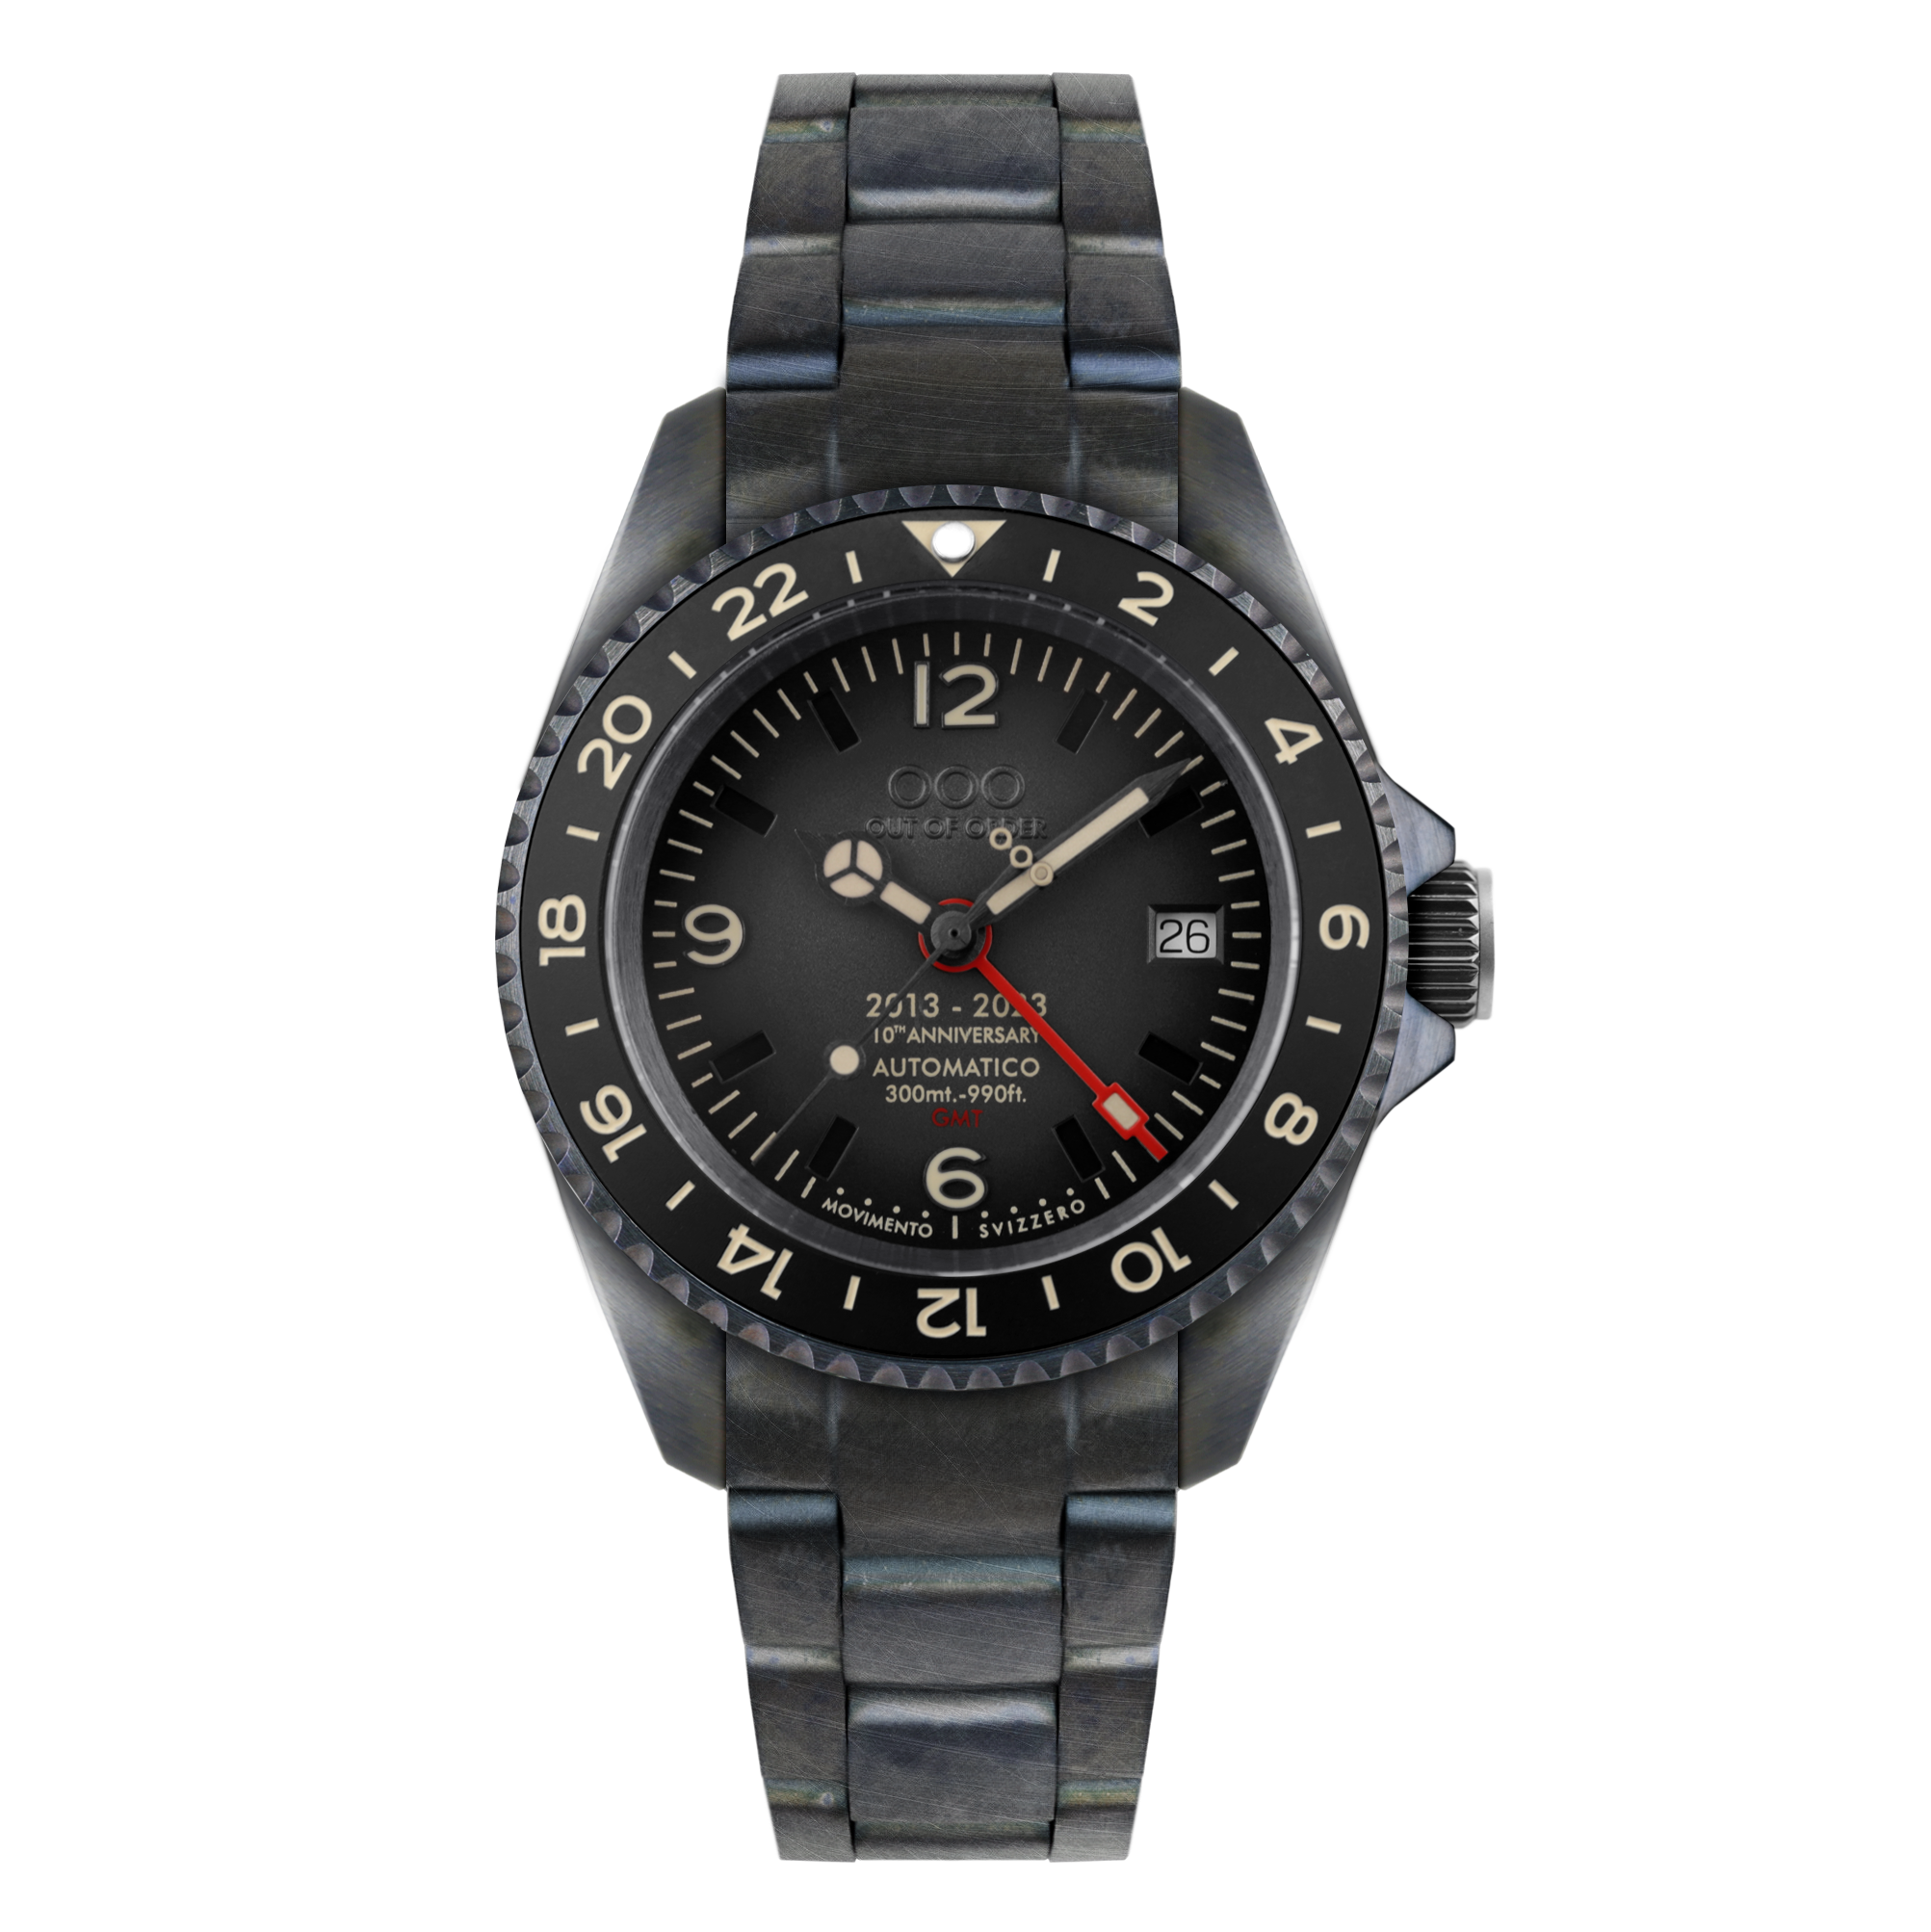 Ltd. Edition.!! Iron Bridge Watch/OOO Watches. Designed by Chad Tsagris -  YouTube